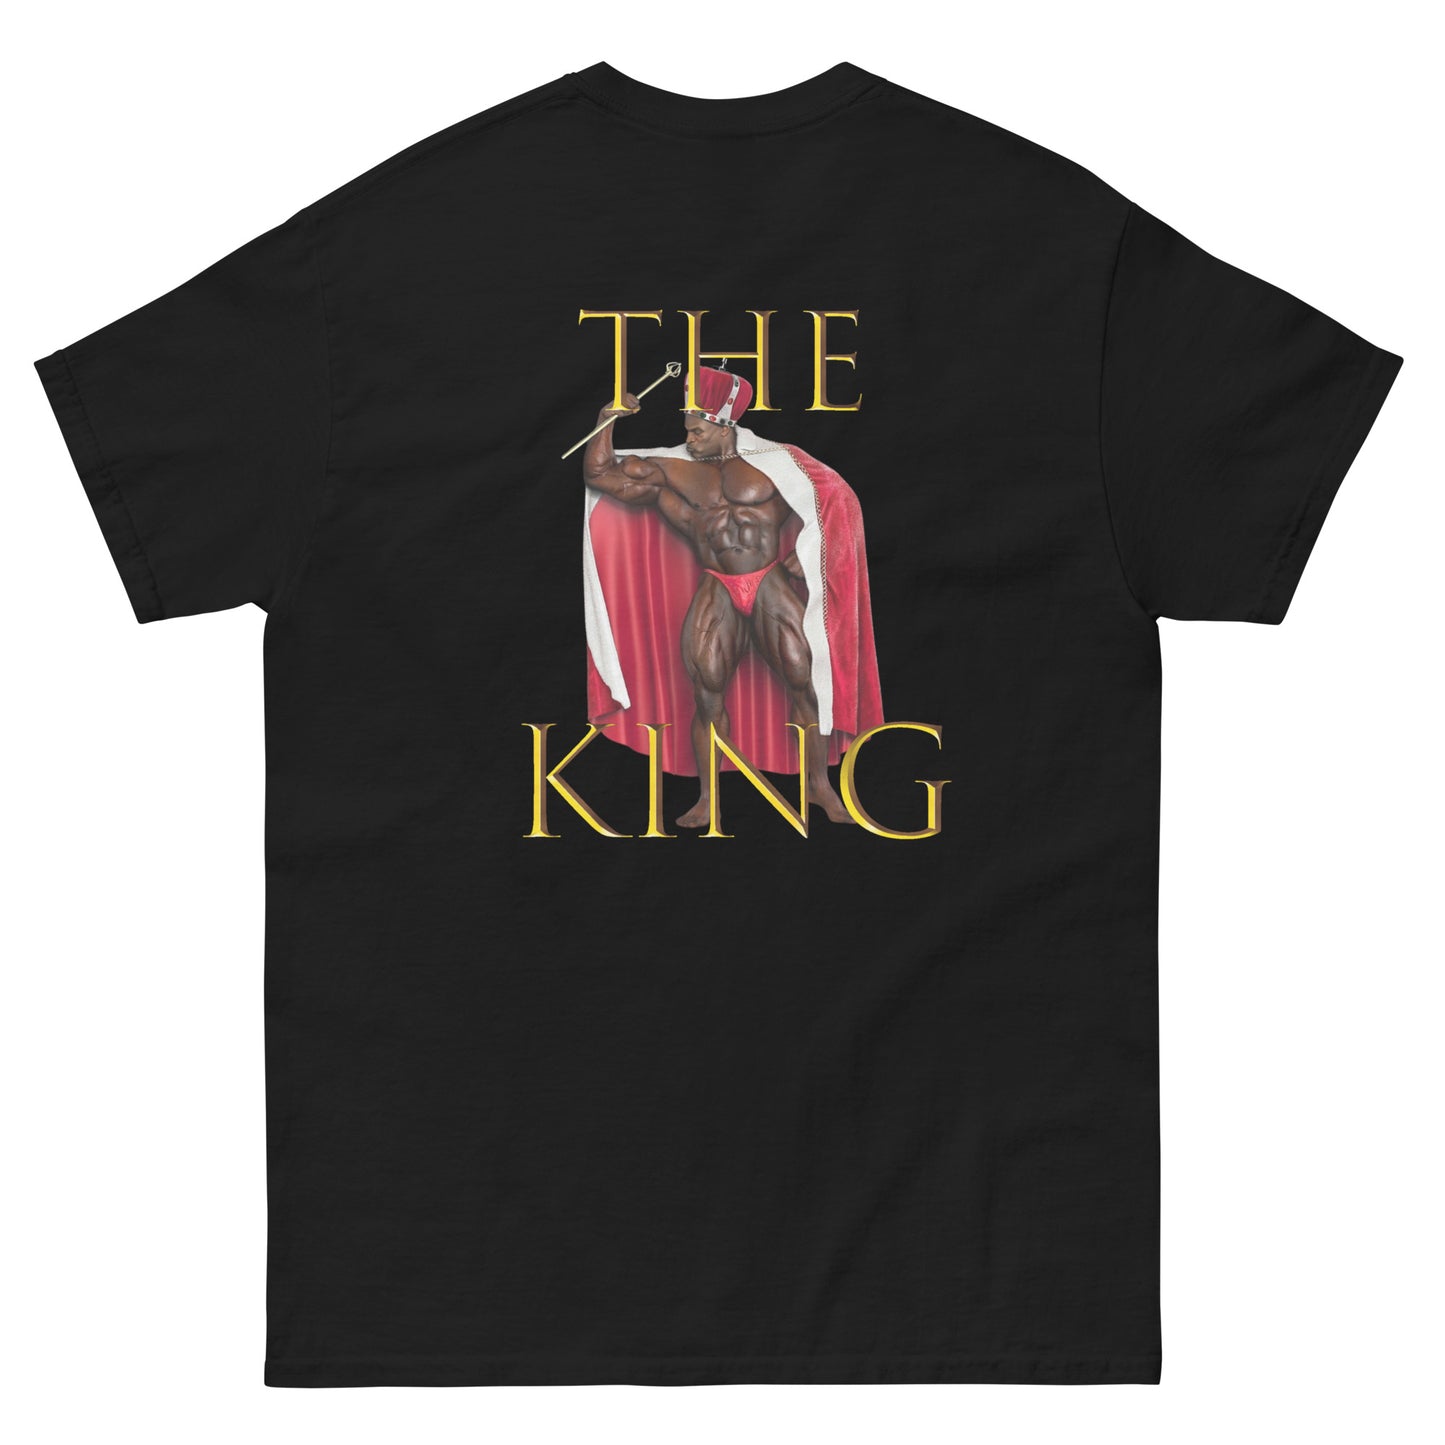 "The king" - Classic T-Shirt